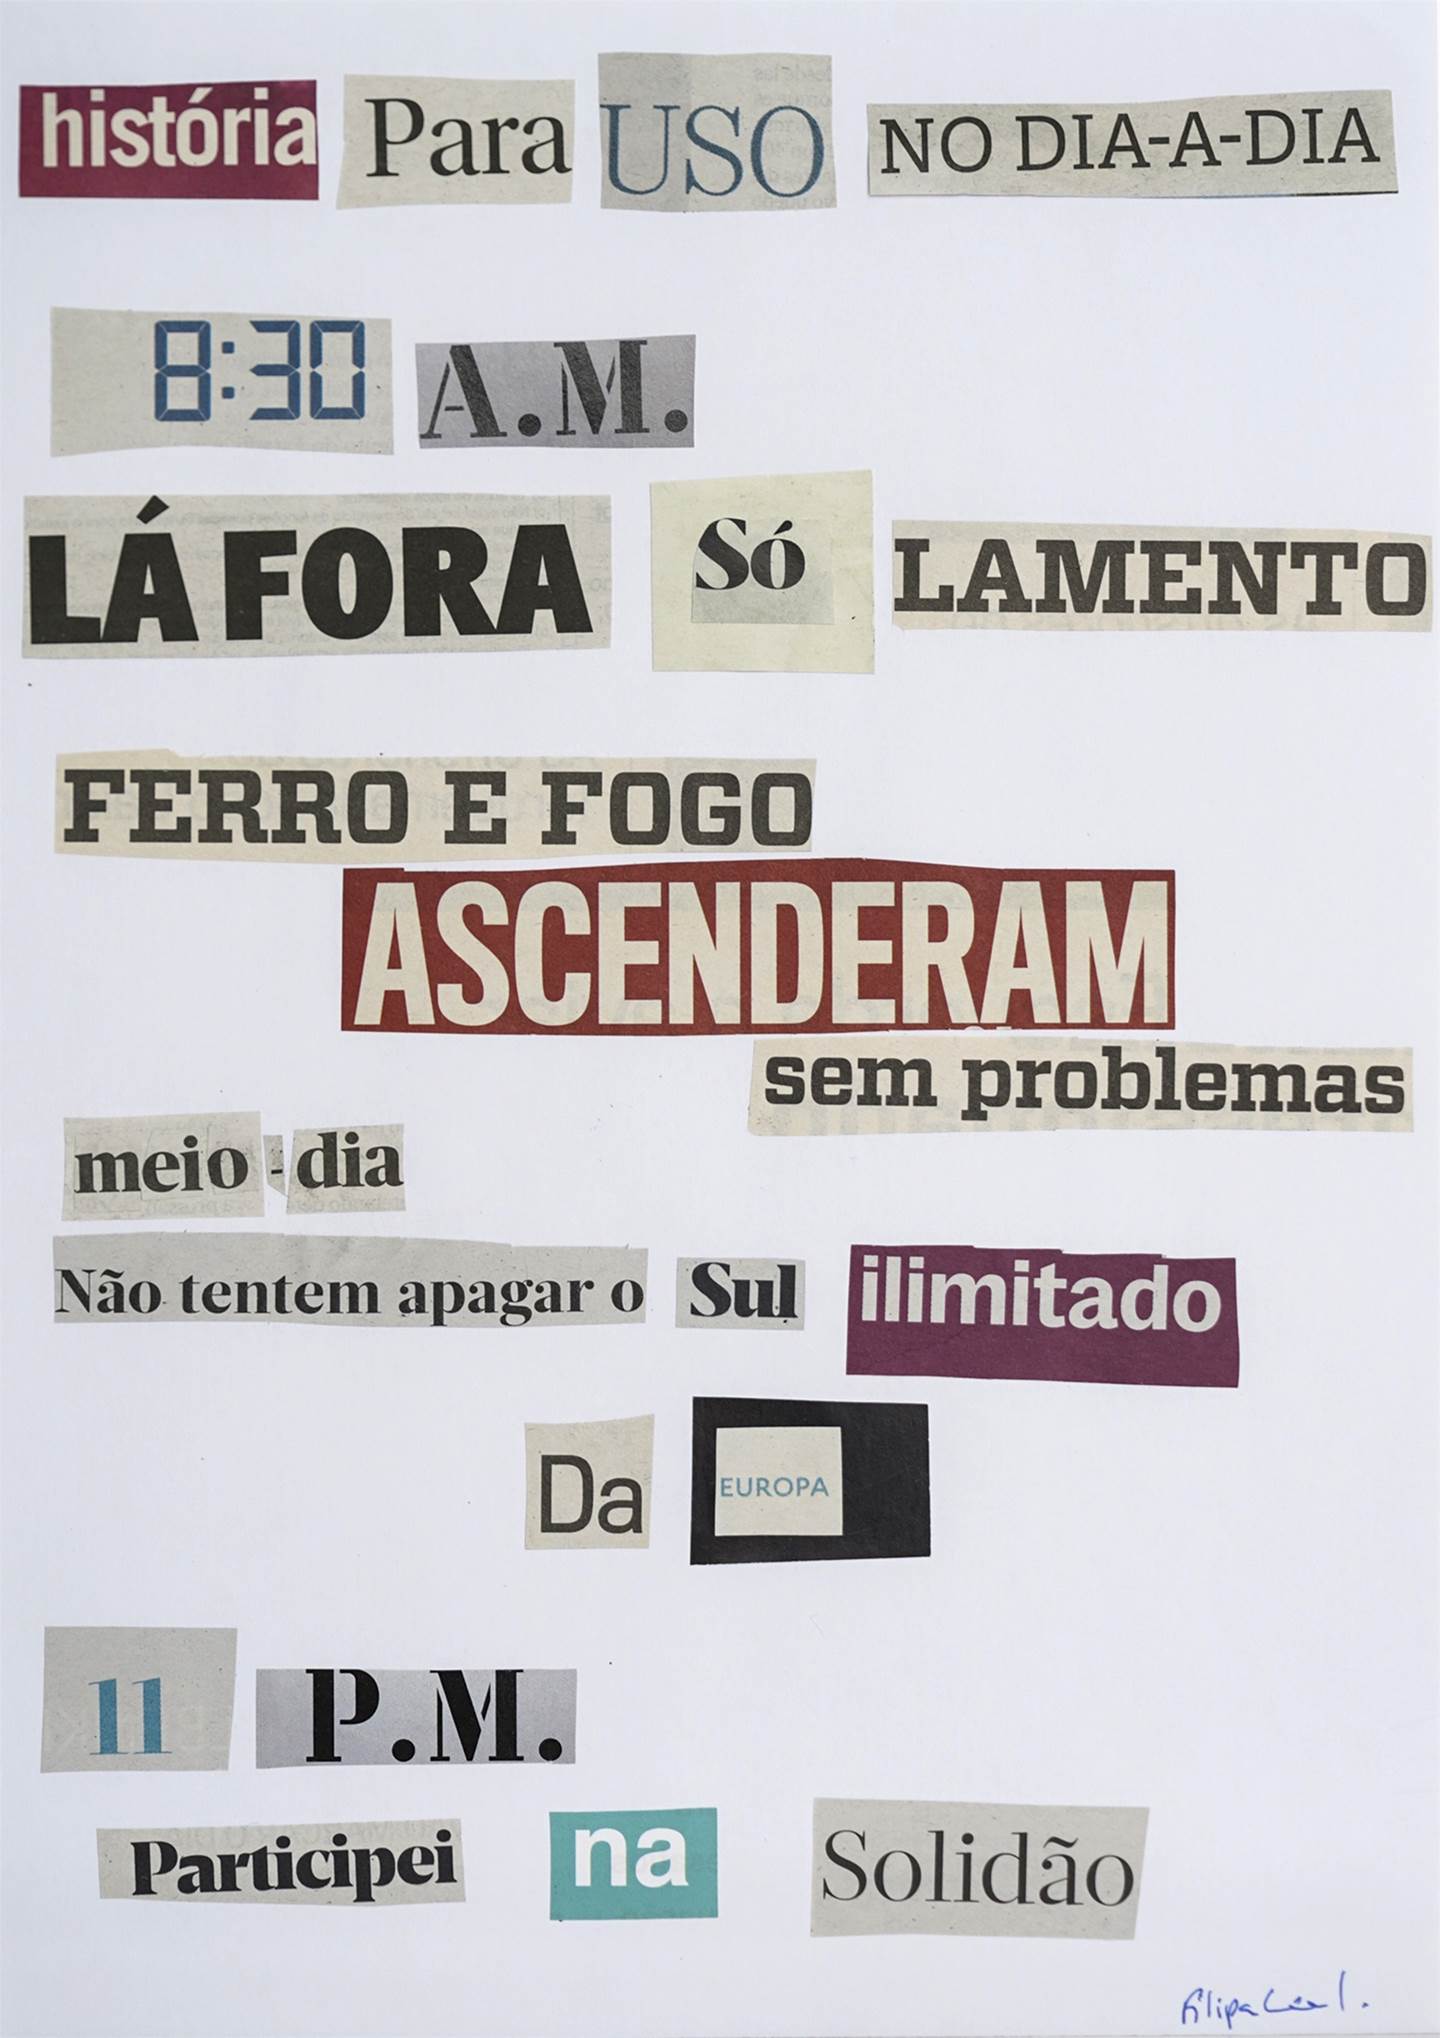 HISTÓRIA PARA USO NO DIA-A-DIA, original Abstrait Collage Dessin et illustration par Filipa  Leal